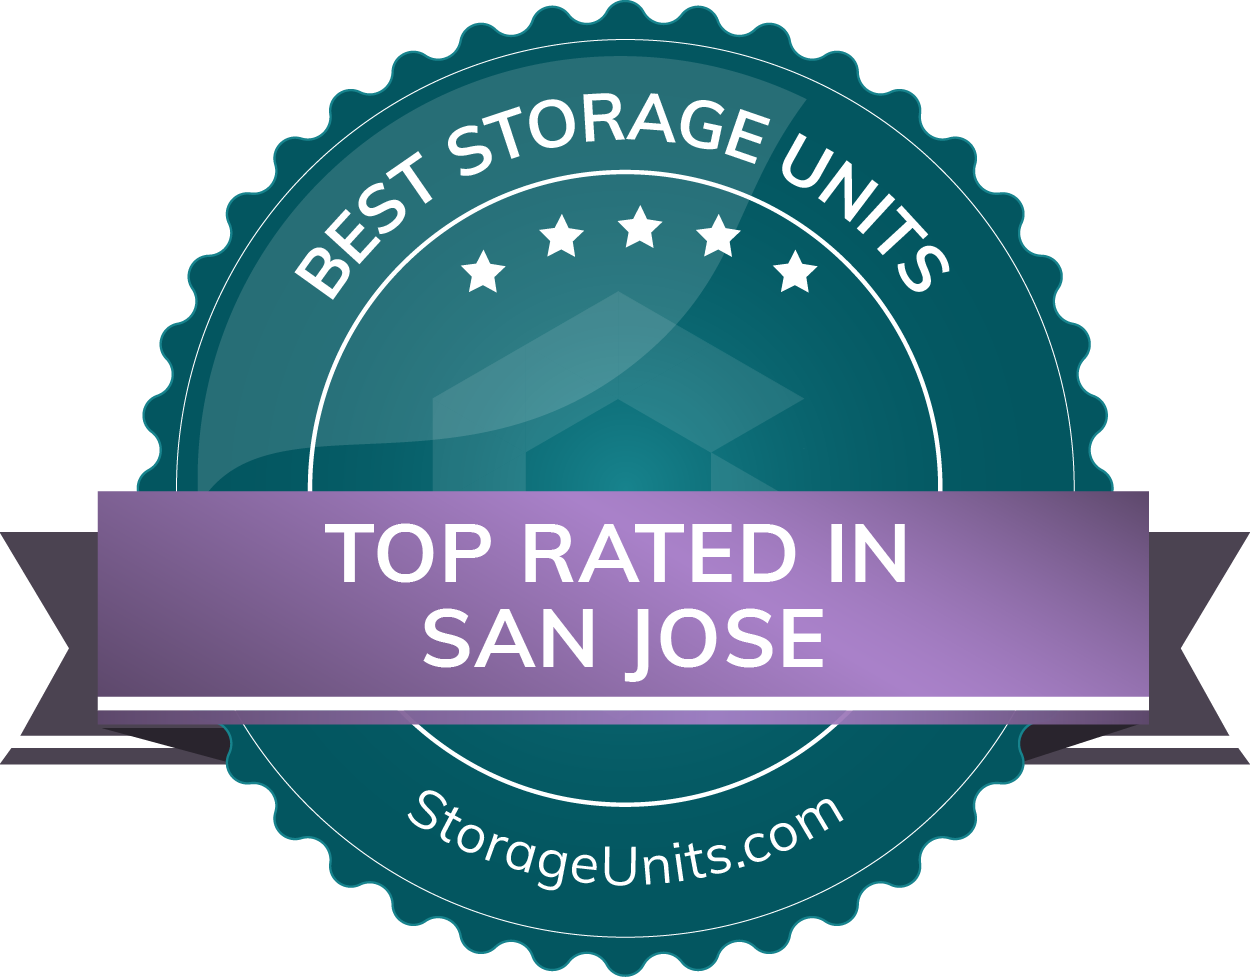 Best Self Storage Units in San Jose, California of 2022